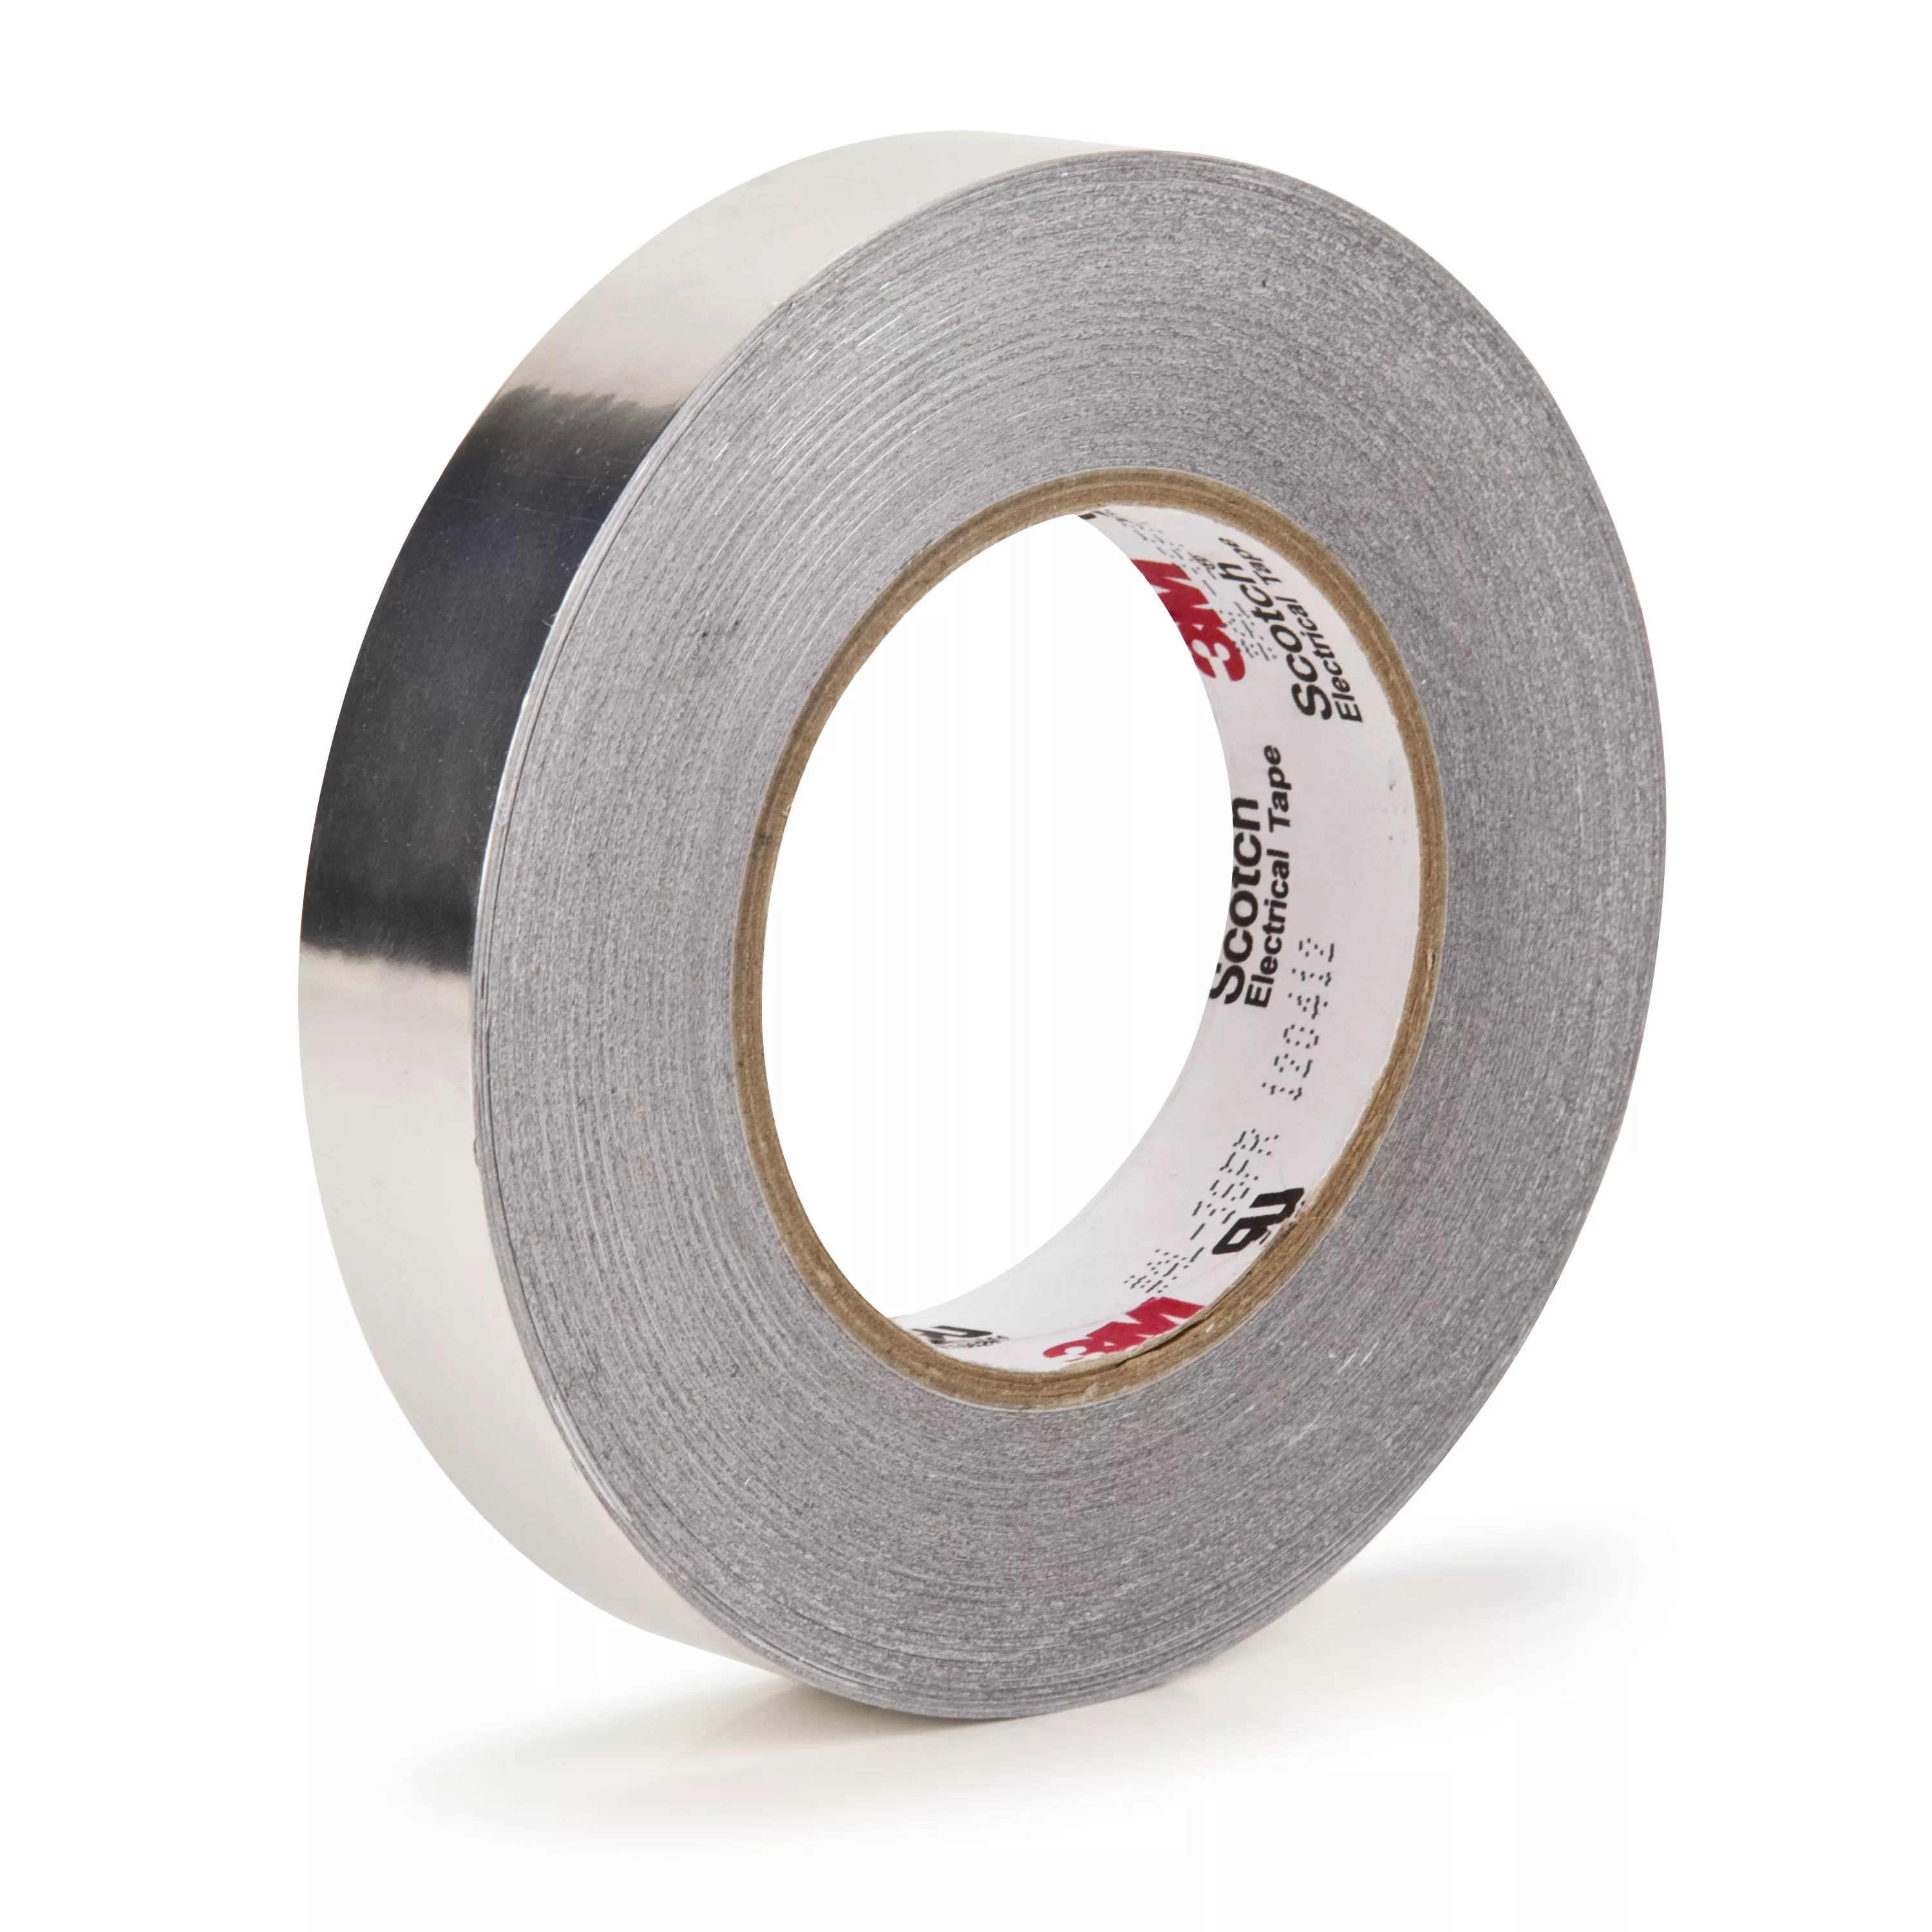 3M™ Laminated Aluminum Foil EMI Shielding Tape AL-36FR, 3/4 x 54.5 yd,
12 Rolls/Case